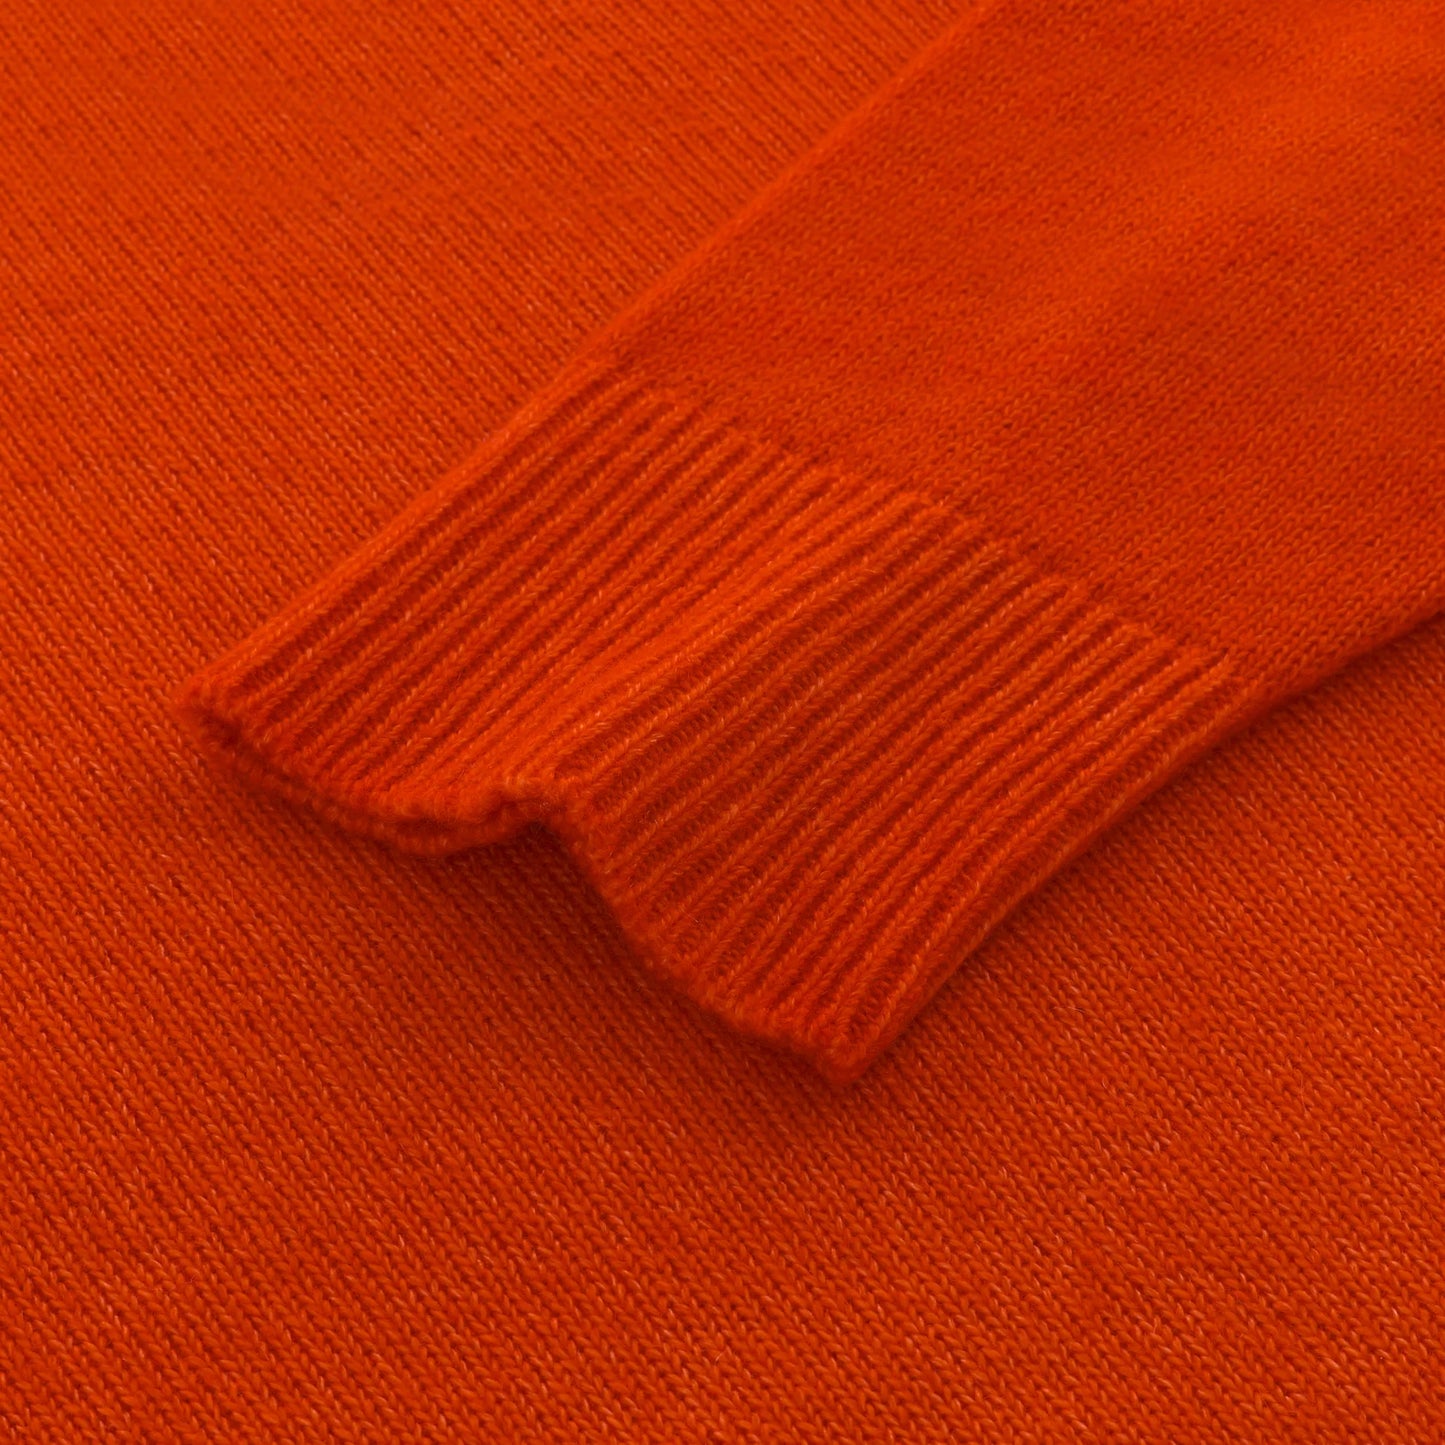 Turtleneck Cashmere Red Orange Sweater